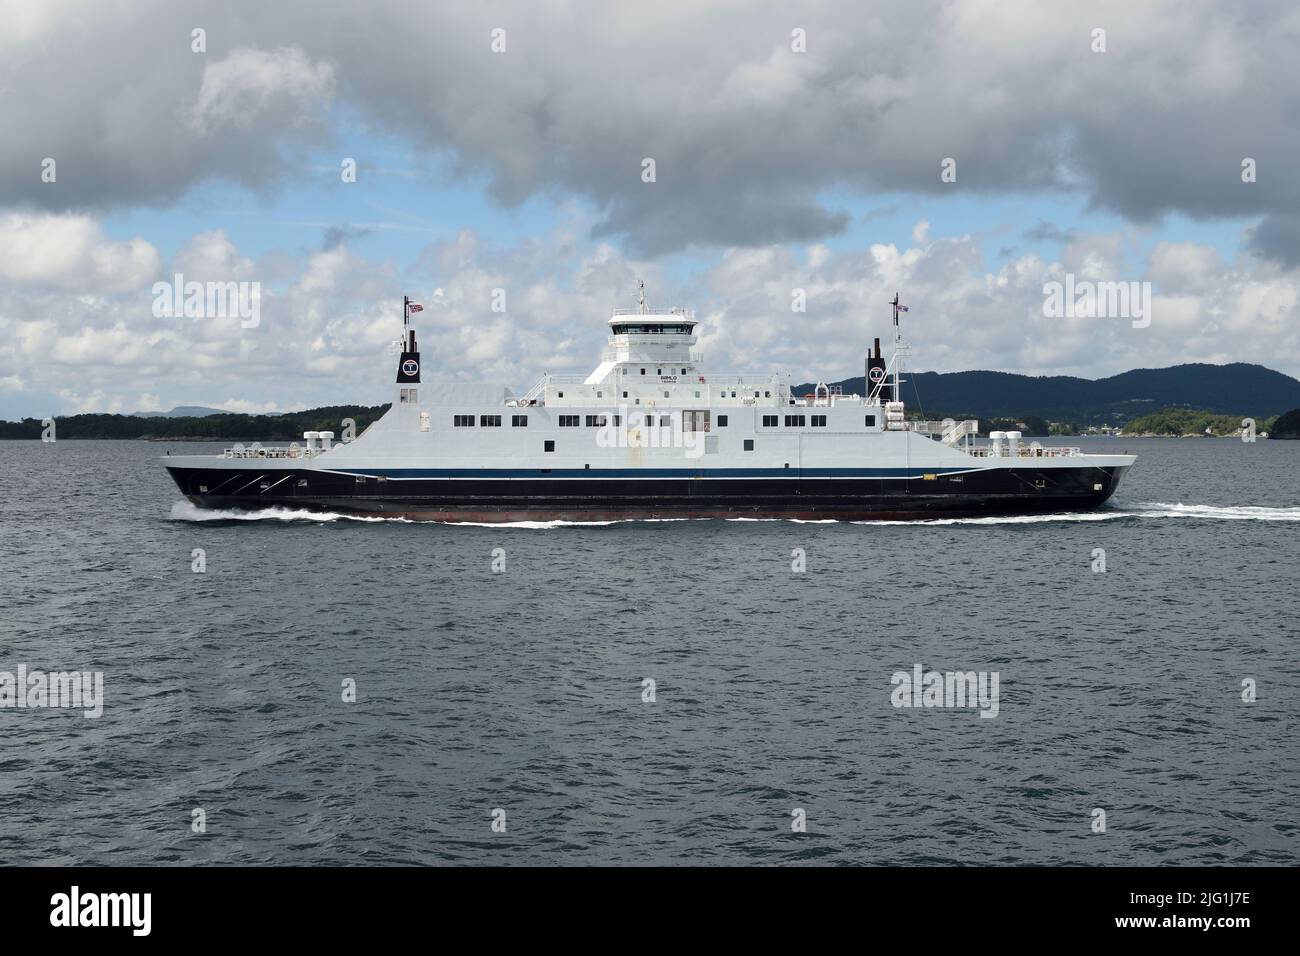 Passenger;ship;ro-ro;ferry;Bømlo;Tromsø; Bastø lll;IMO;9299408;Noruega;النرويج;挪威;挪威;Noorwegen;Norja;Norvège;Norwegen;ノルウェー;Norwegia;Норвегия;Norway;N Stock Photo